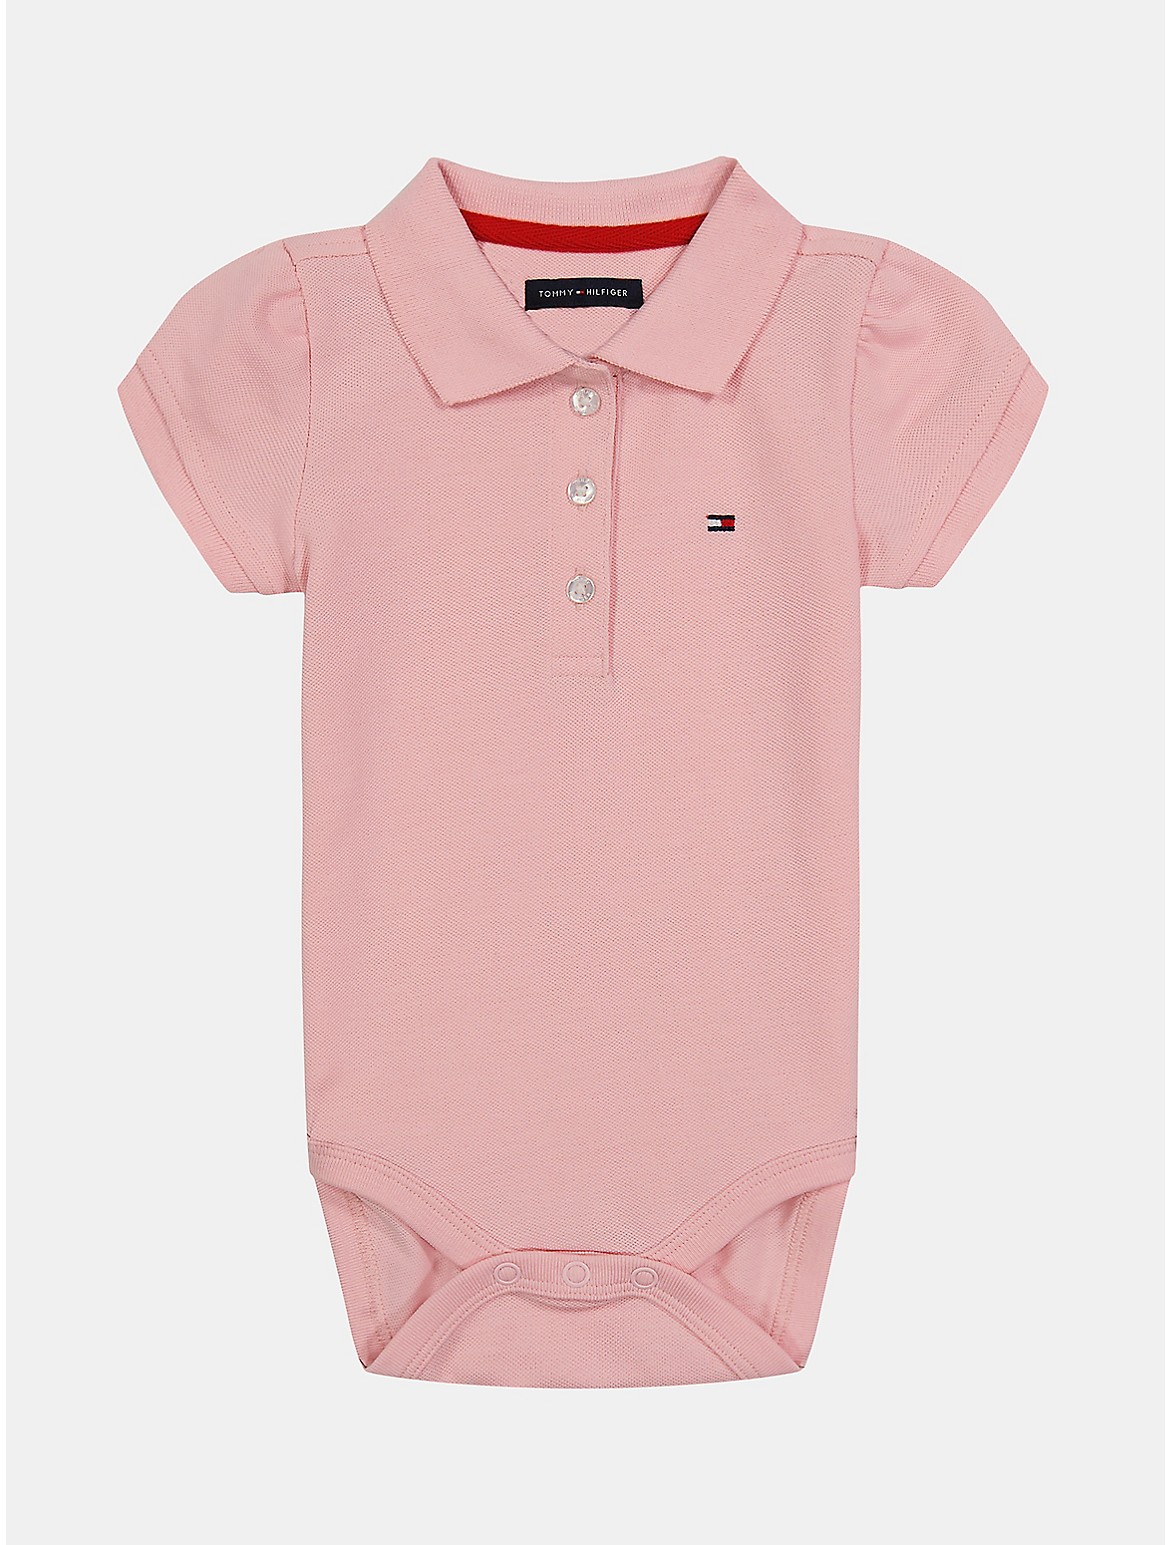 Tommy Hilfiger Girls' Babies' Solid Bodysuit - Pink - 18M